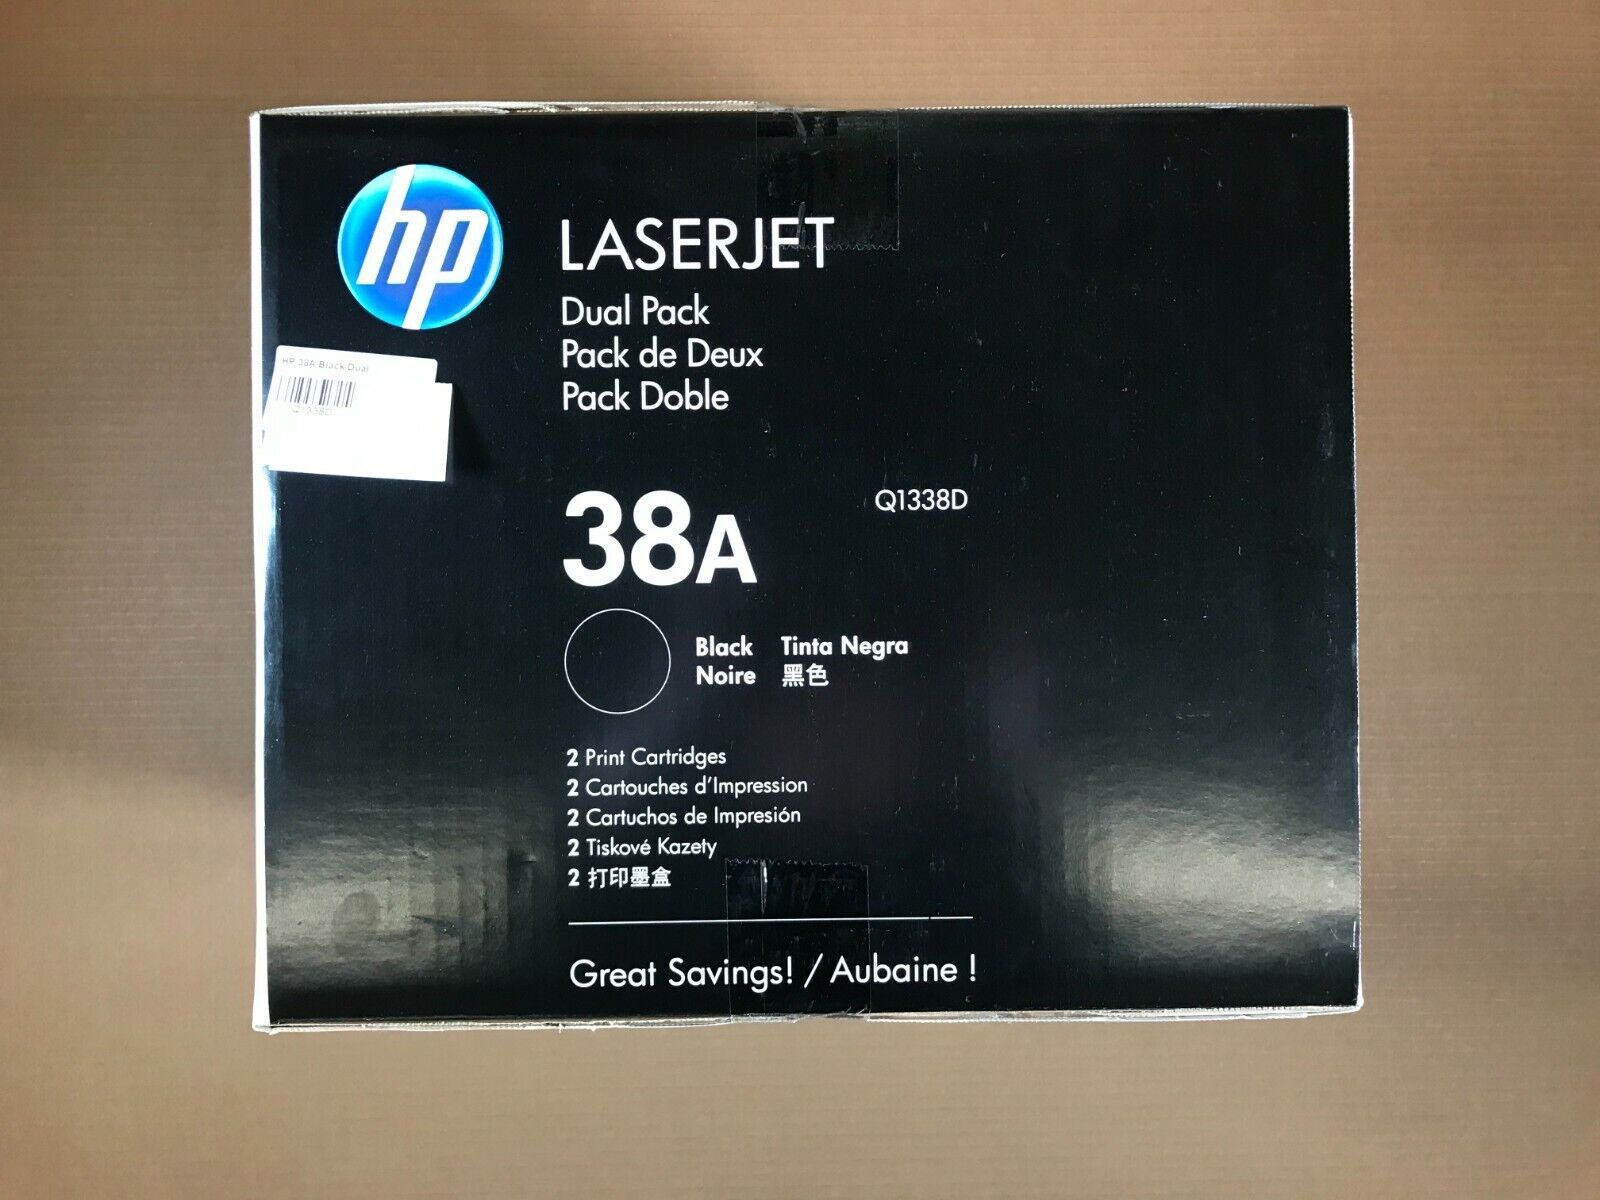 HP 38A Black Print Cartridge Dual Pack  Q1338D For LaserJet 4200, 4200L 